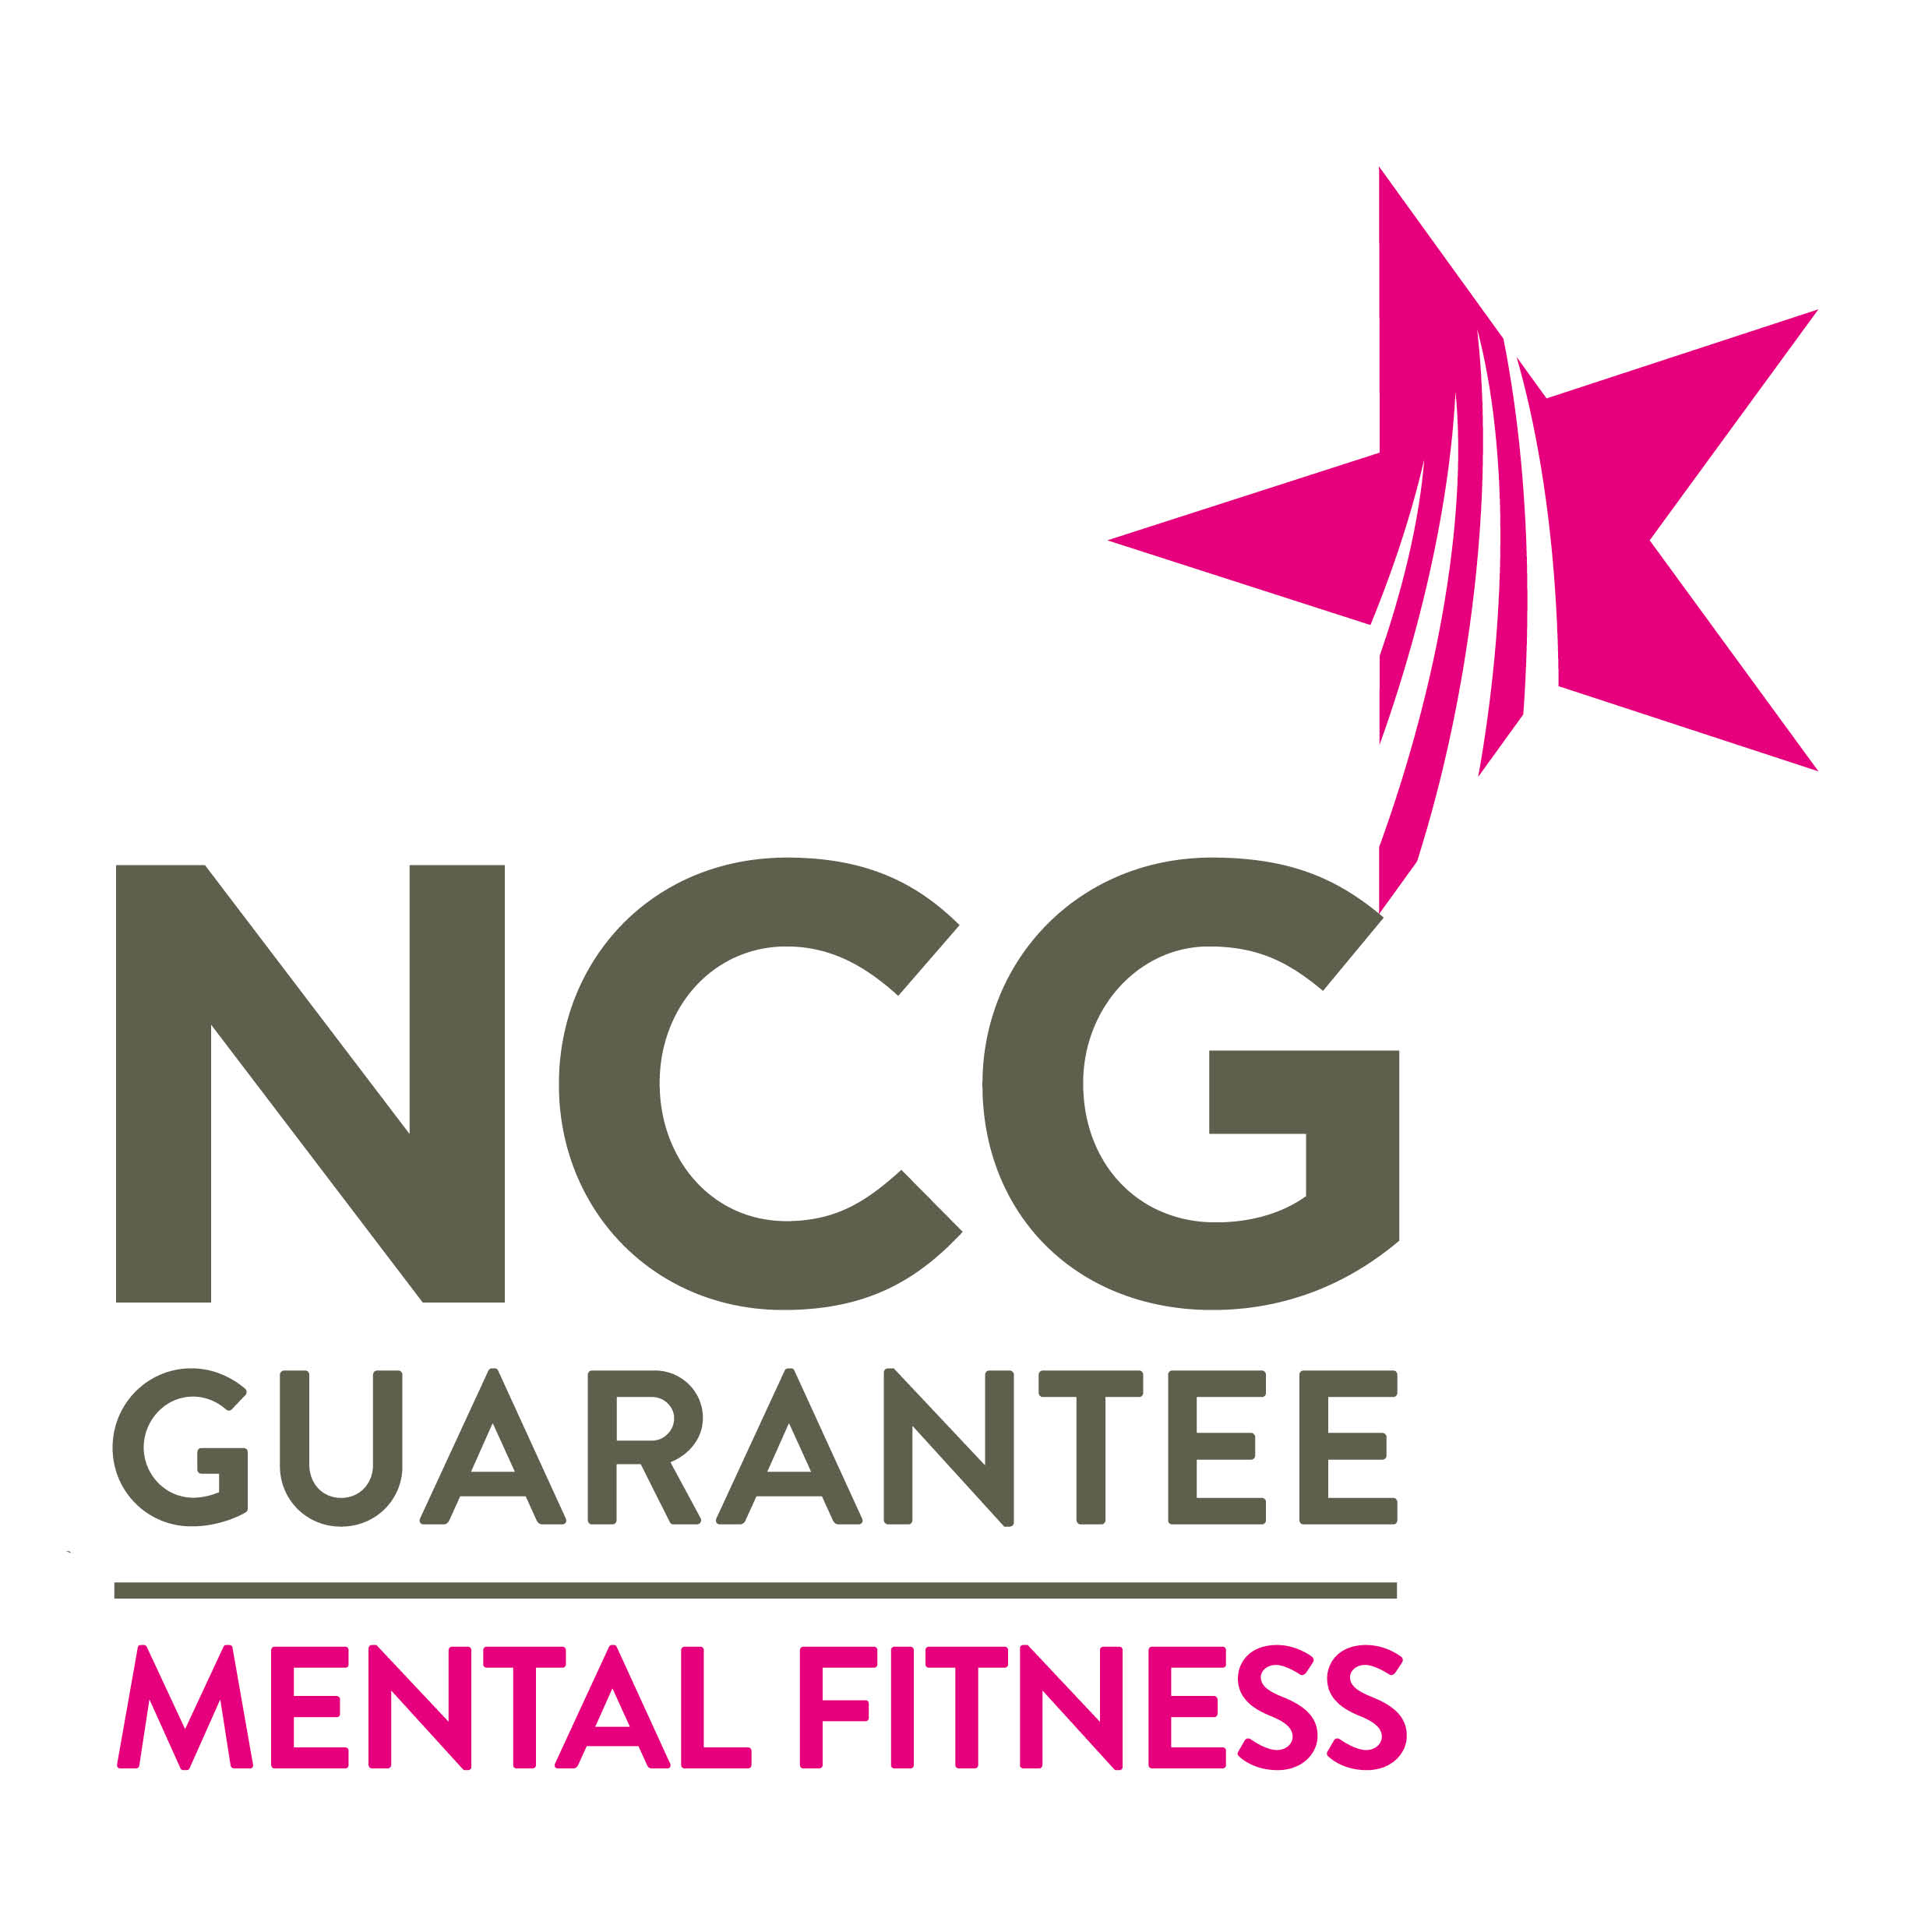 NCG Guarantee Mental Fitness Logo